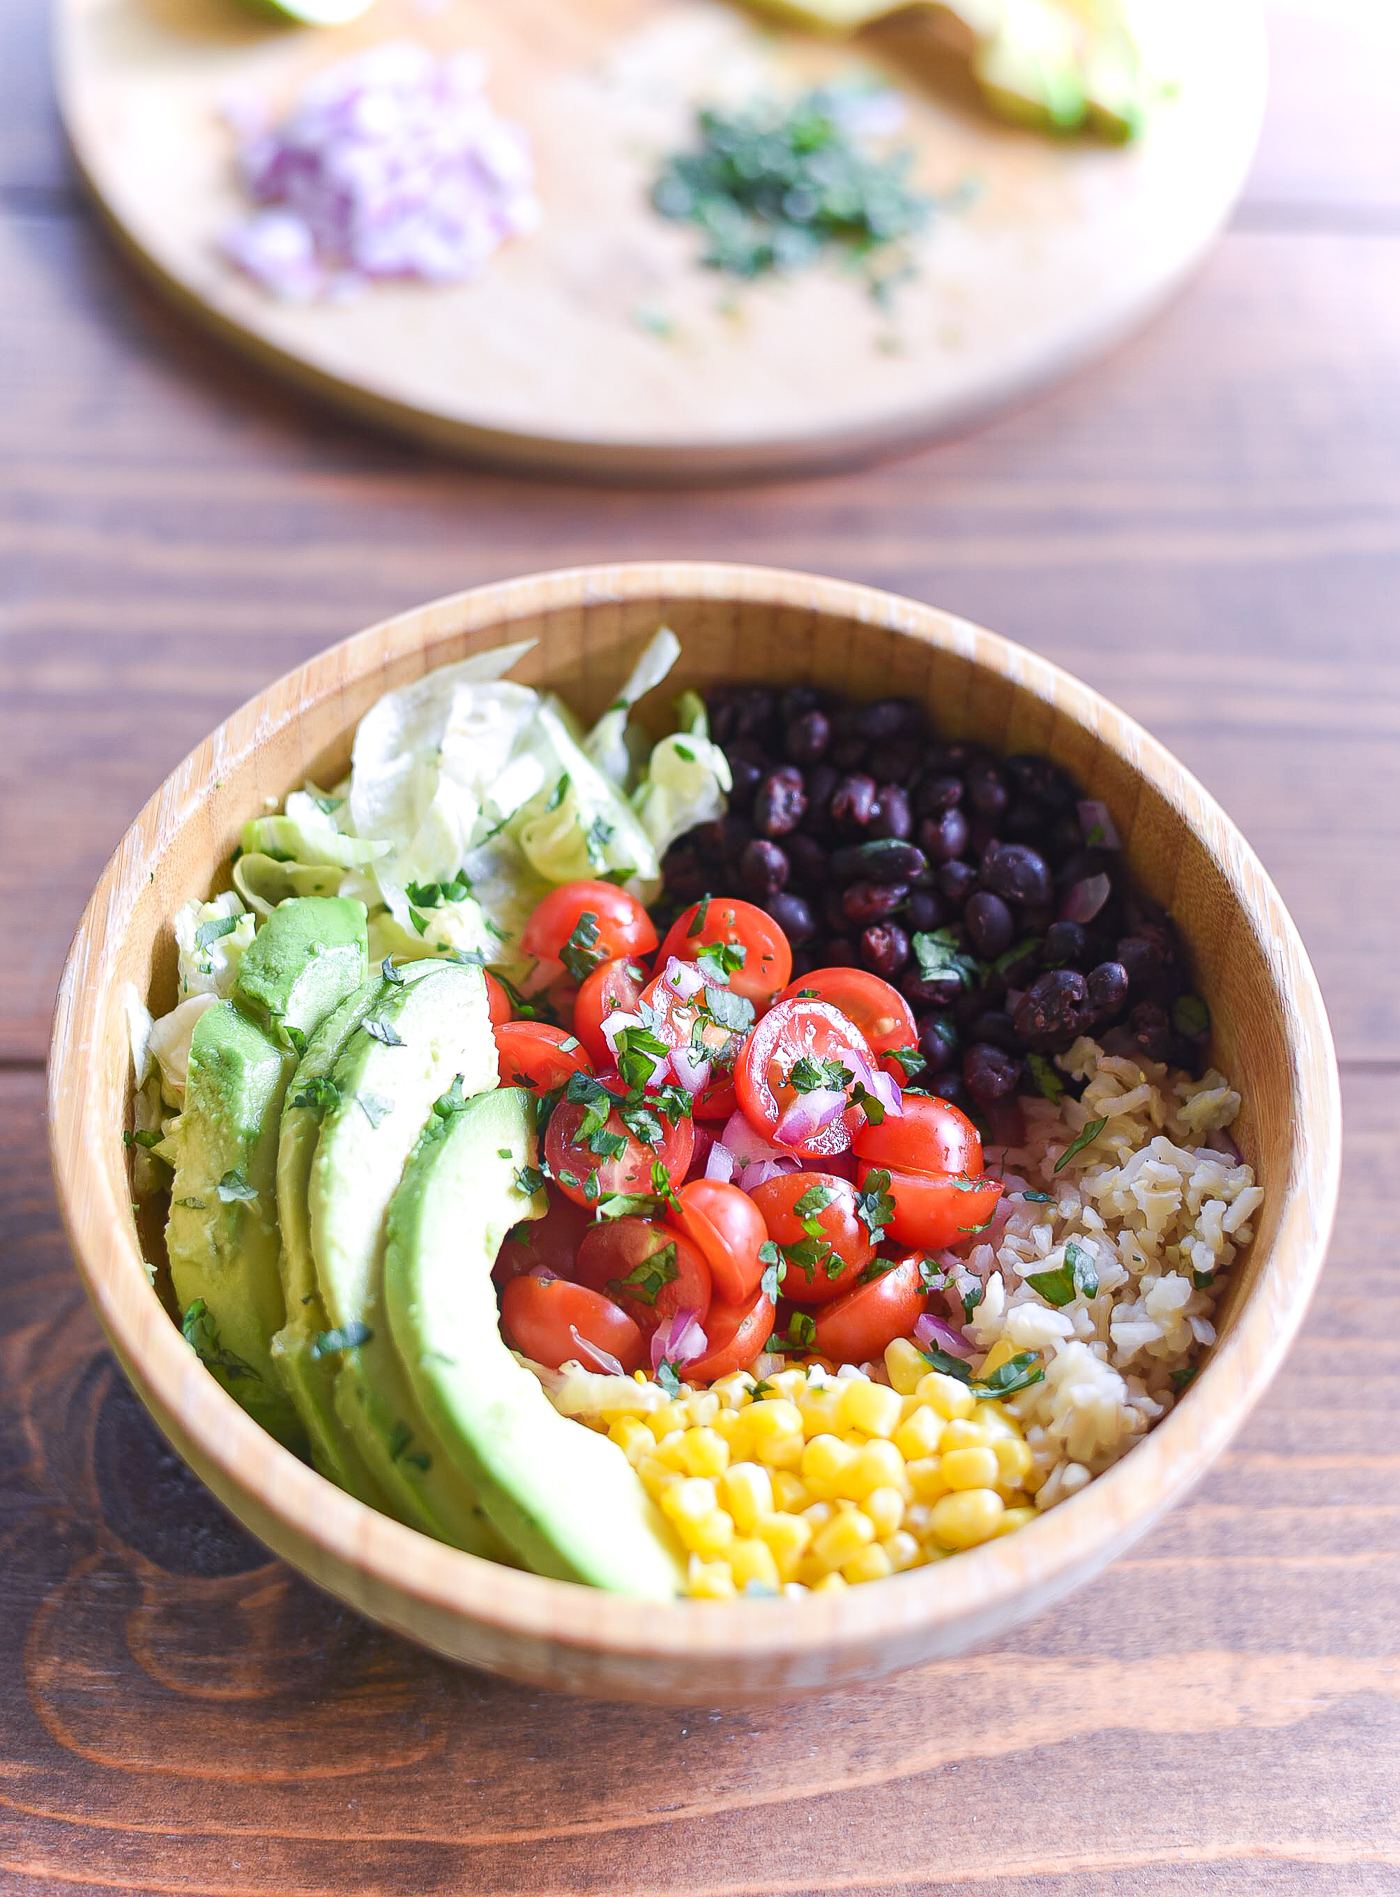 Mexican Taco(less) Buddha Bowl - Taco Salad Recipe Ideas - Mexican Buddha Bowl - Brown Rice and Beans Buddha Bowl Recipe Ideas